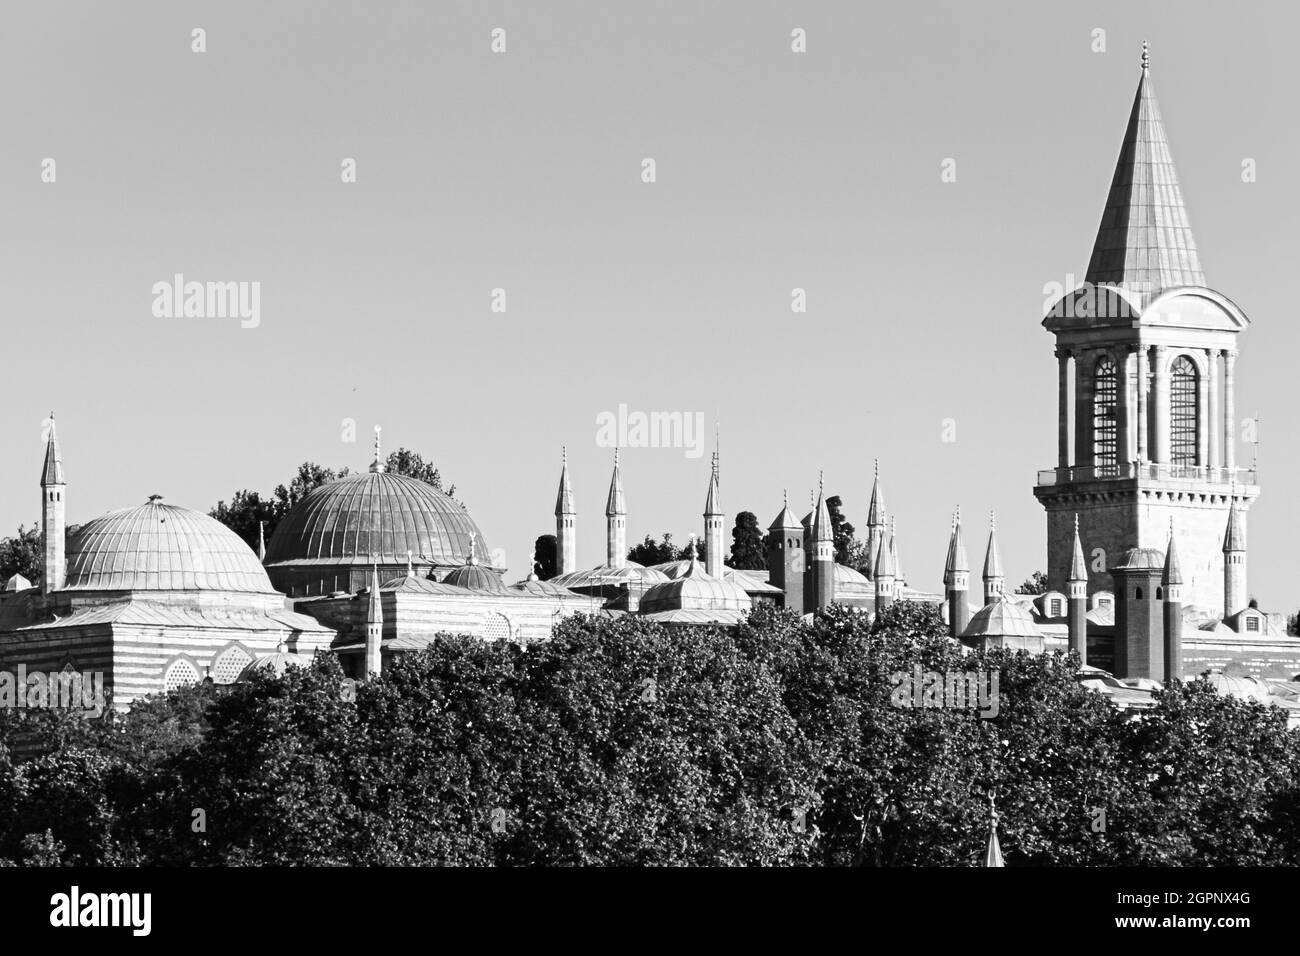 Istanbul, Turkey; May 26th 2013: Roofs, domes and minarets of Topkapi Palace. Stock Photo